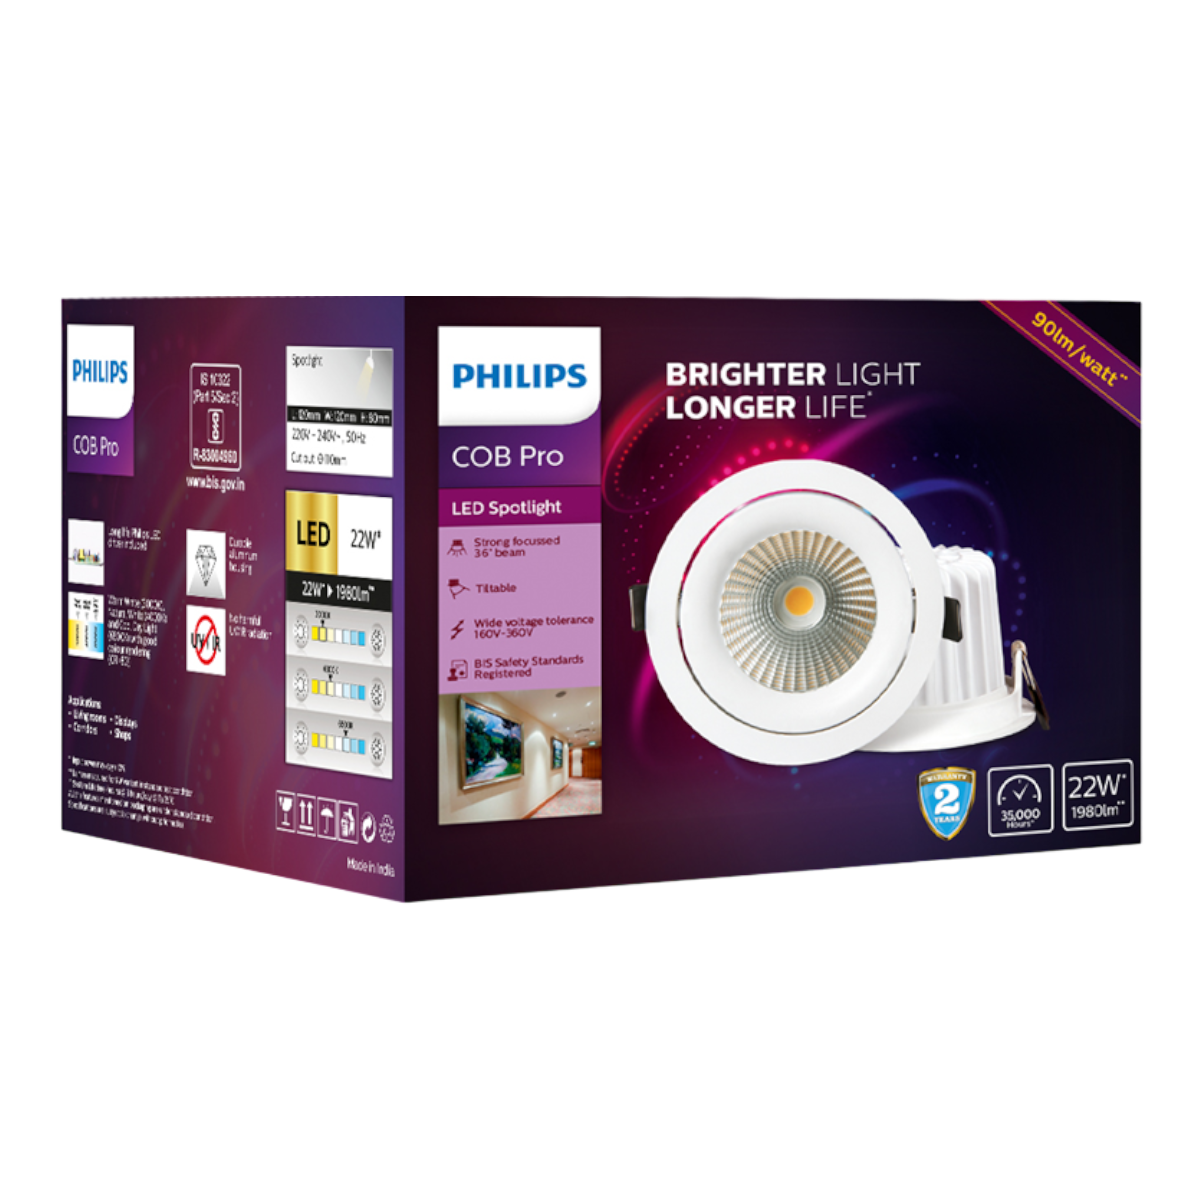 Buy Philips LED COB Pro | Philips lighting – Philips lighting Online Store